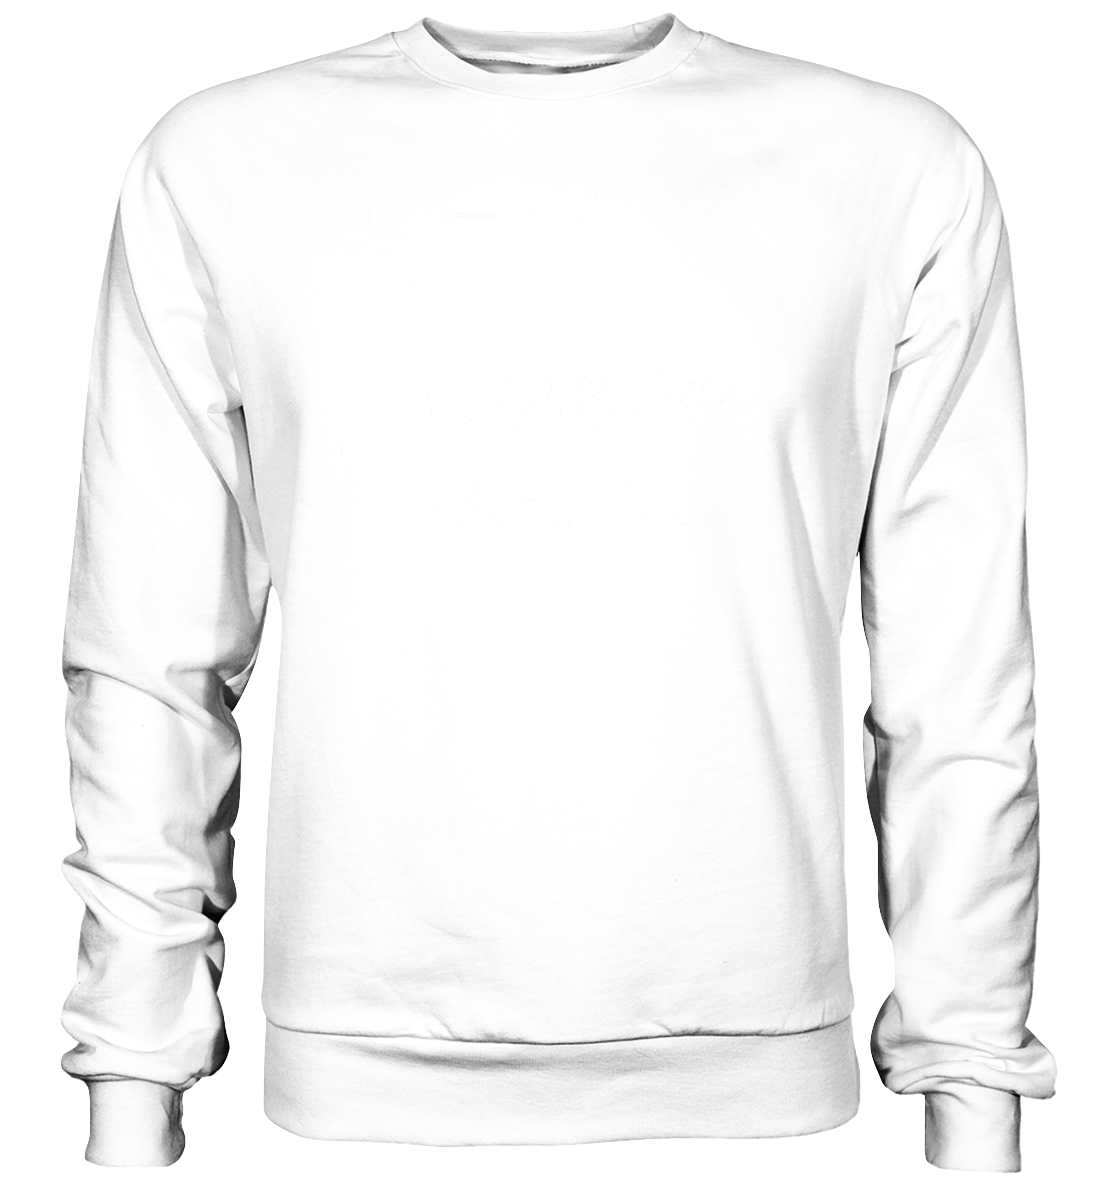 Magdeburg Originals 2 - Sweatshirt